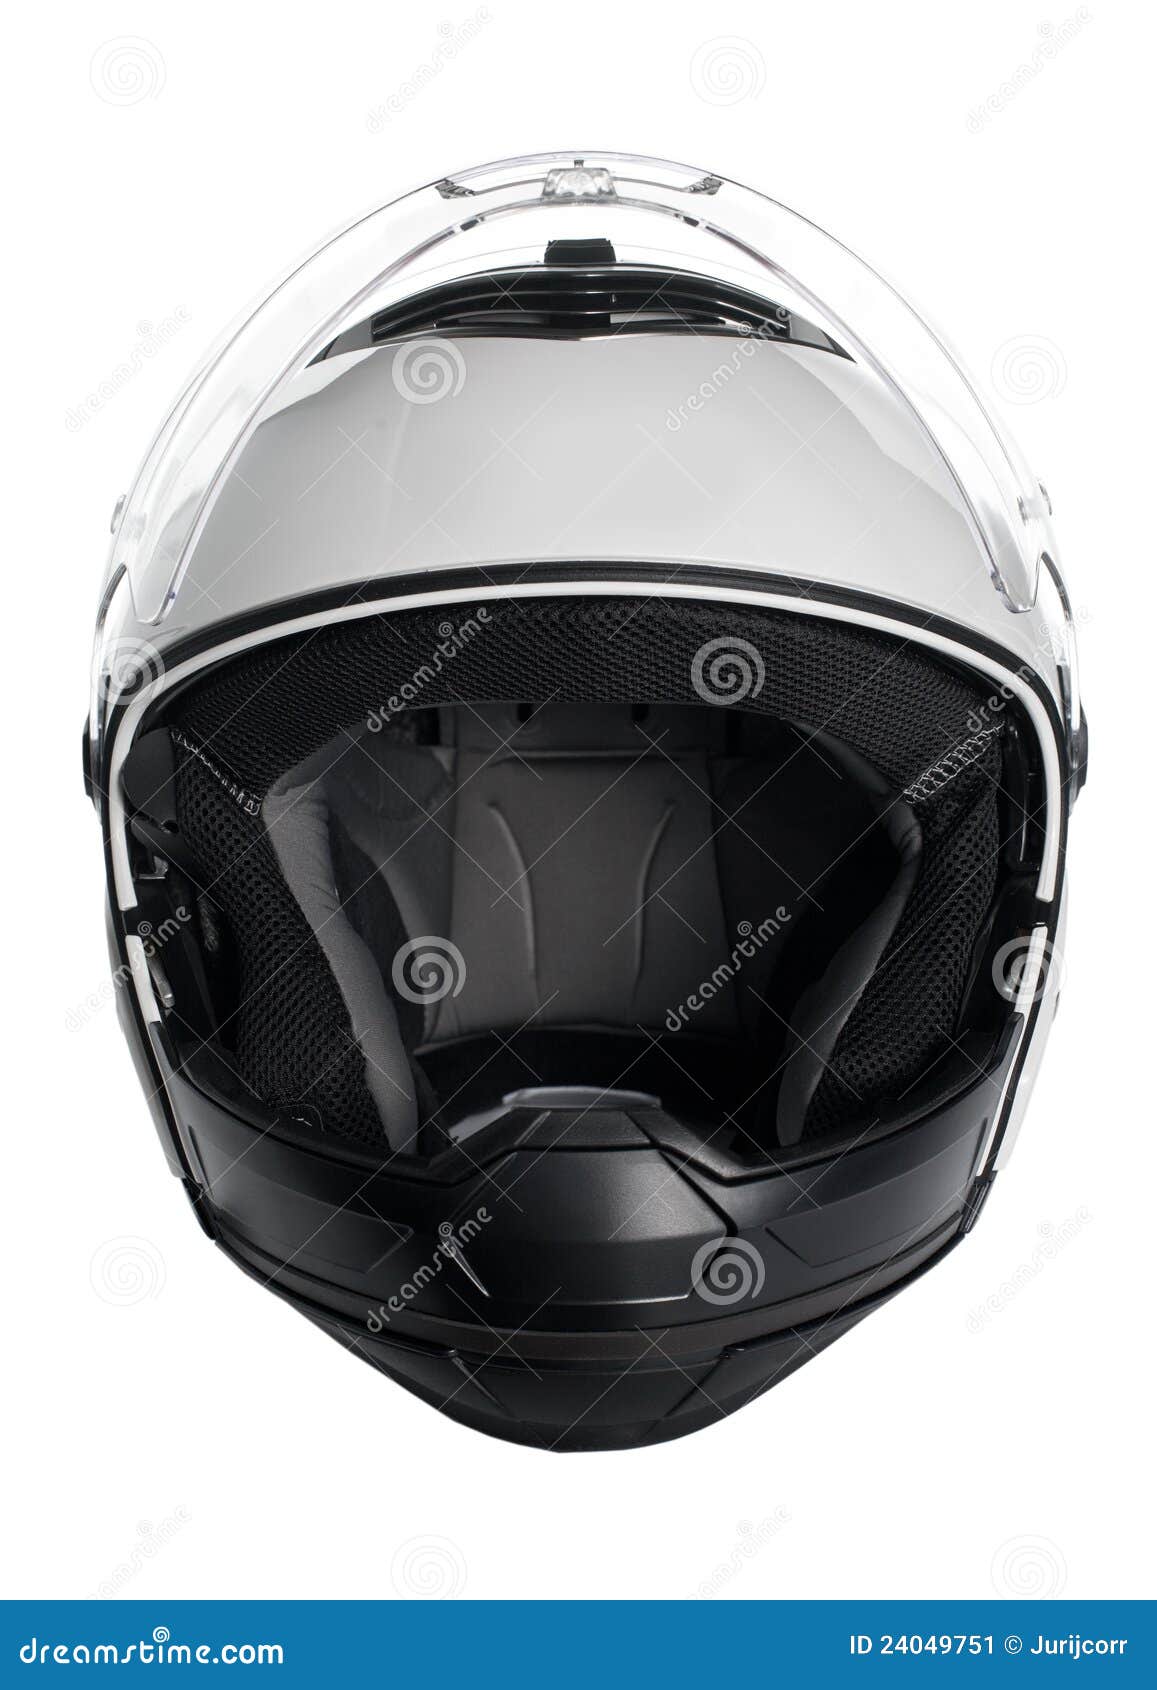 White motorcycle helmet stock image. Image of open, motorized - 24049751